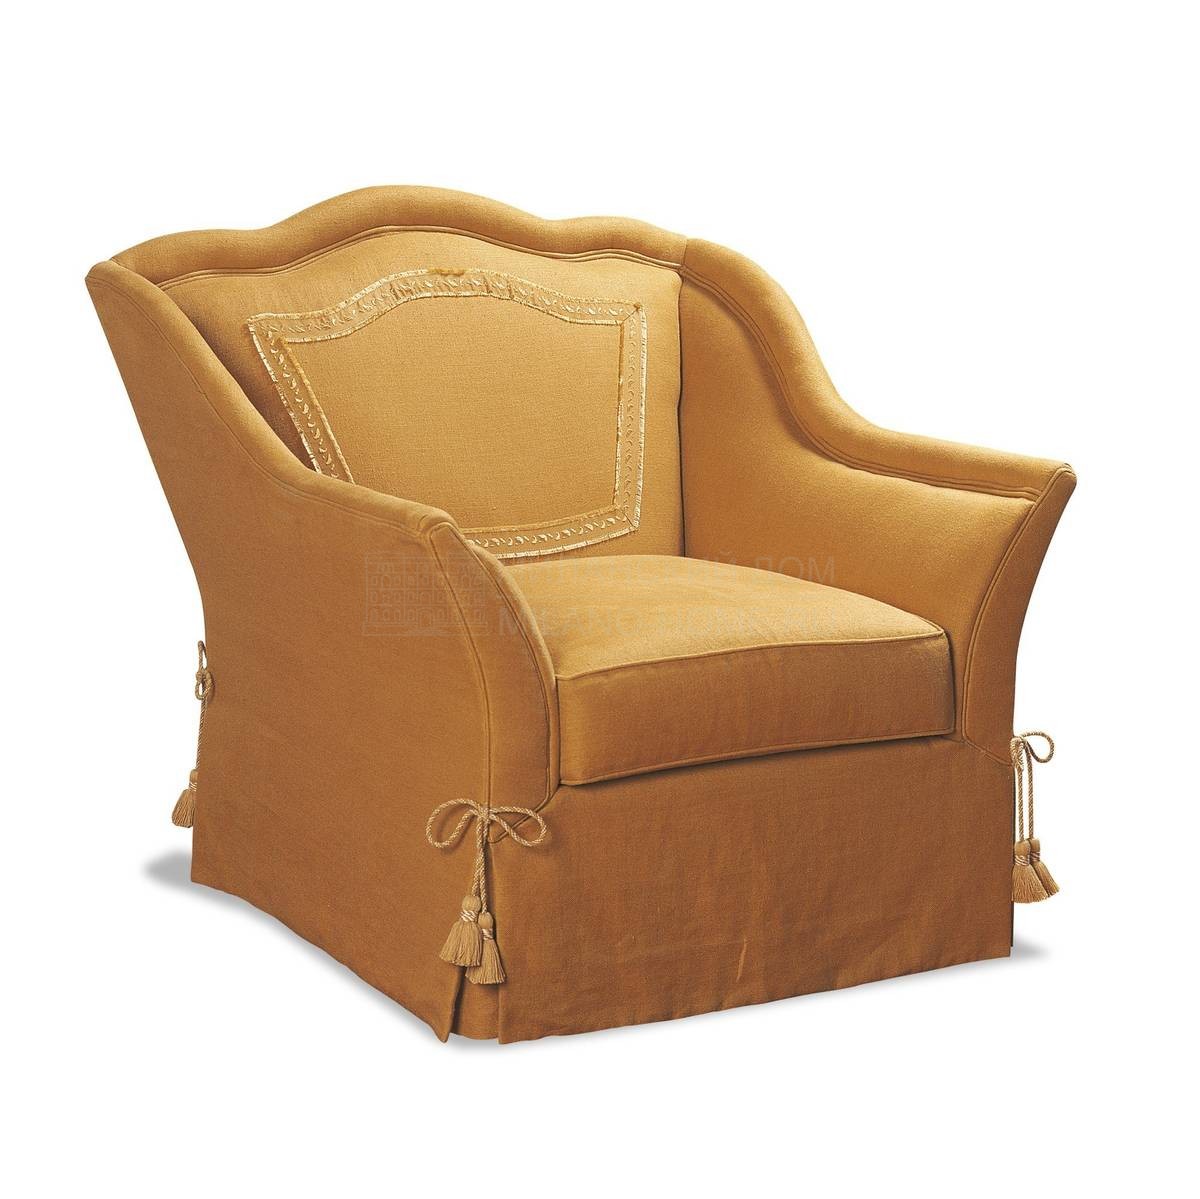 Кресло The Upholstery/P380 из Италии фабрики FRANCESCO MOLON